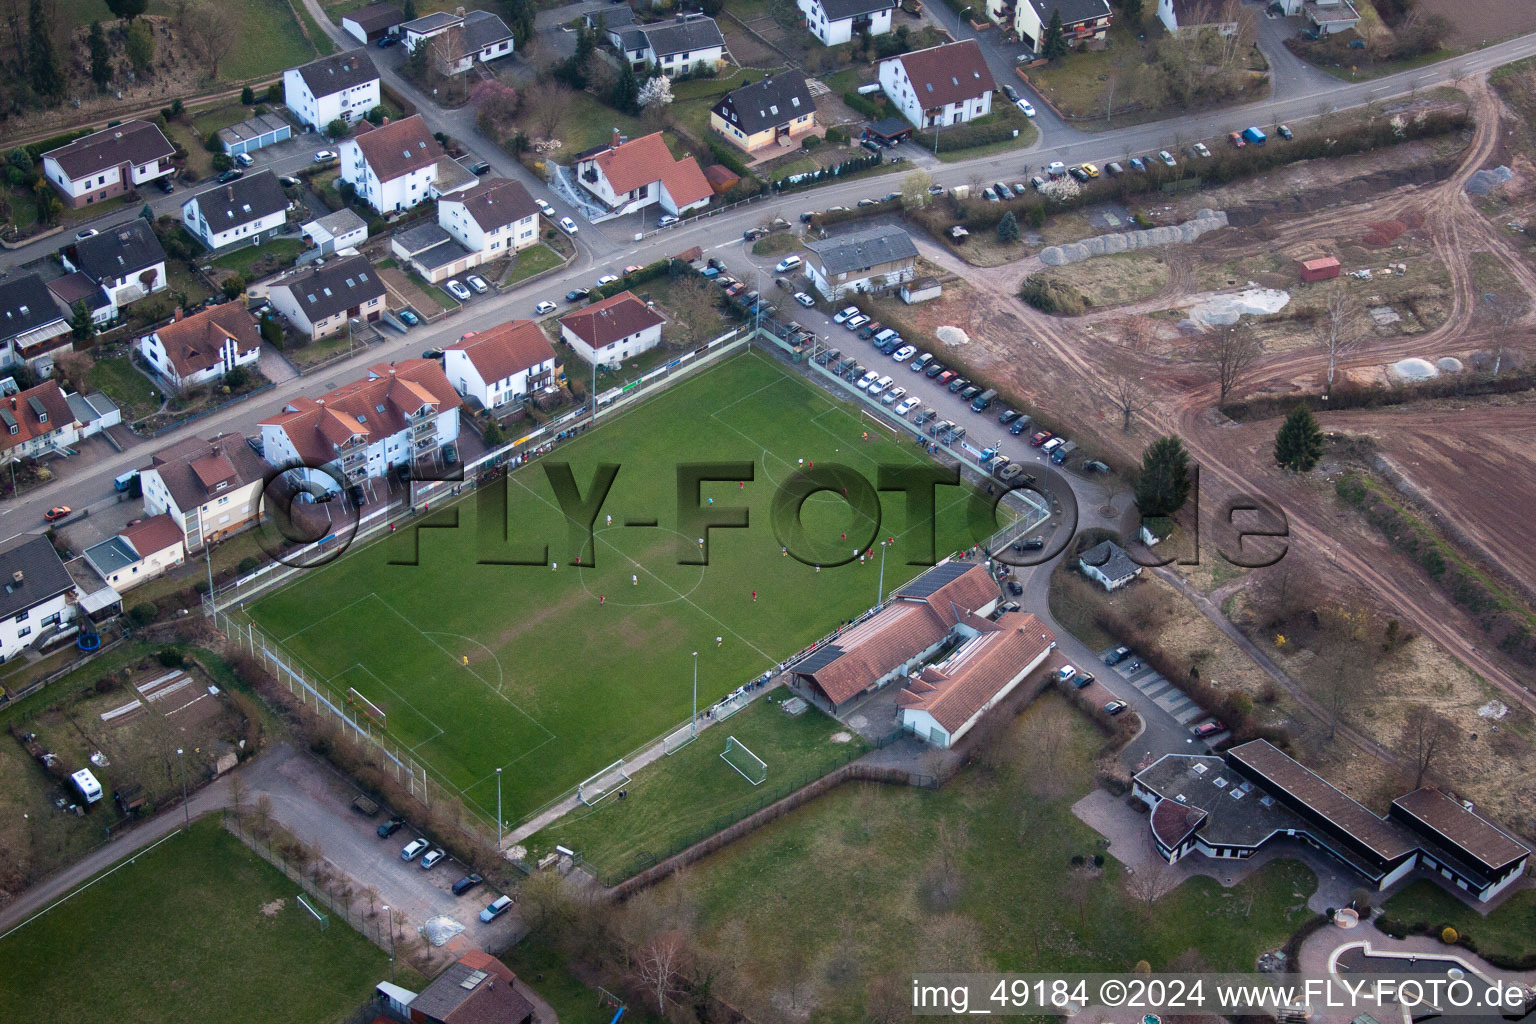 Sports fields in the district Ingenheim in Billigheim-Ingenheim in the state Rhineland-Palatinate, Germany seen from above